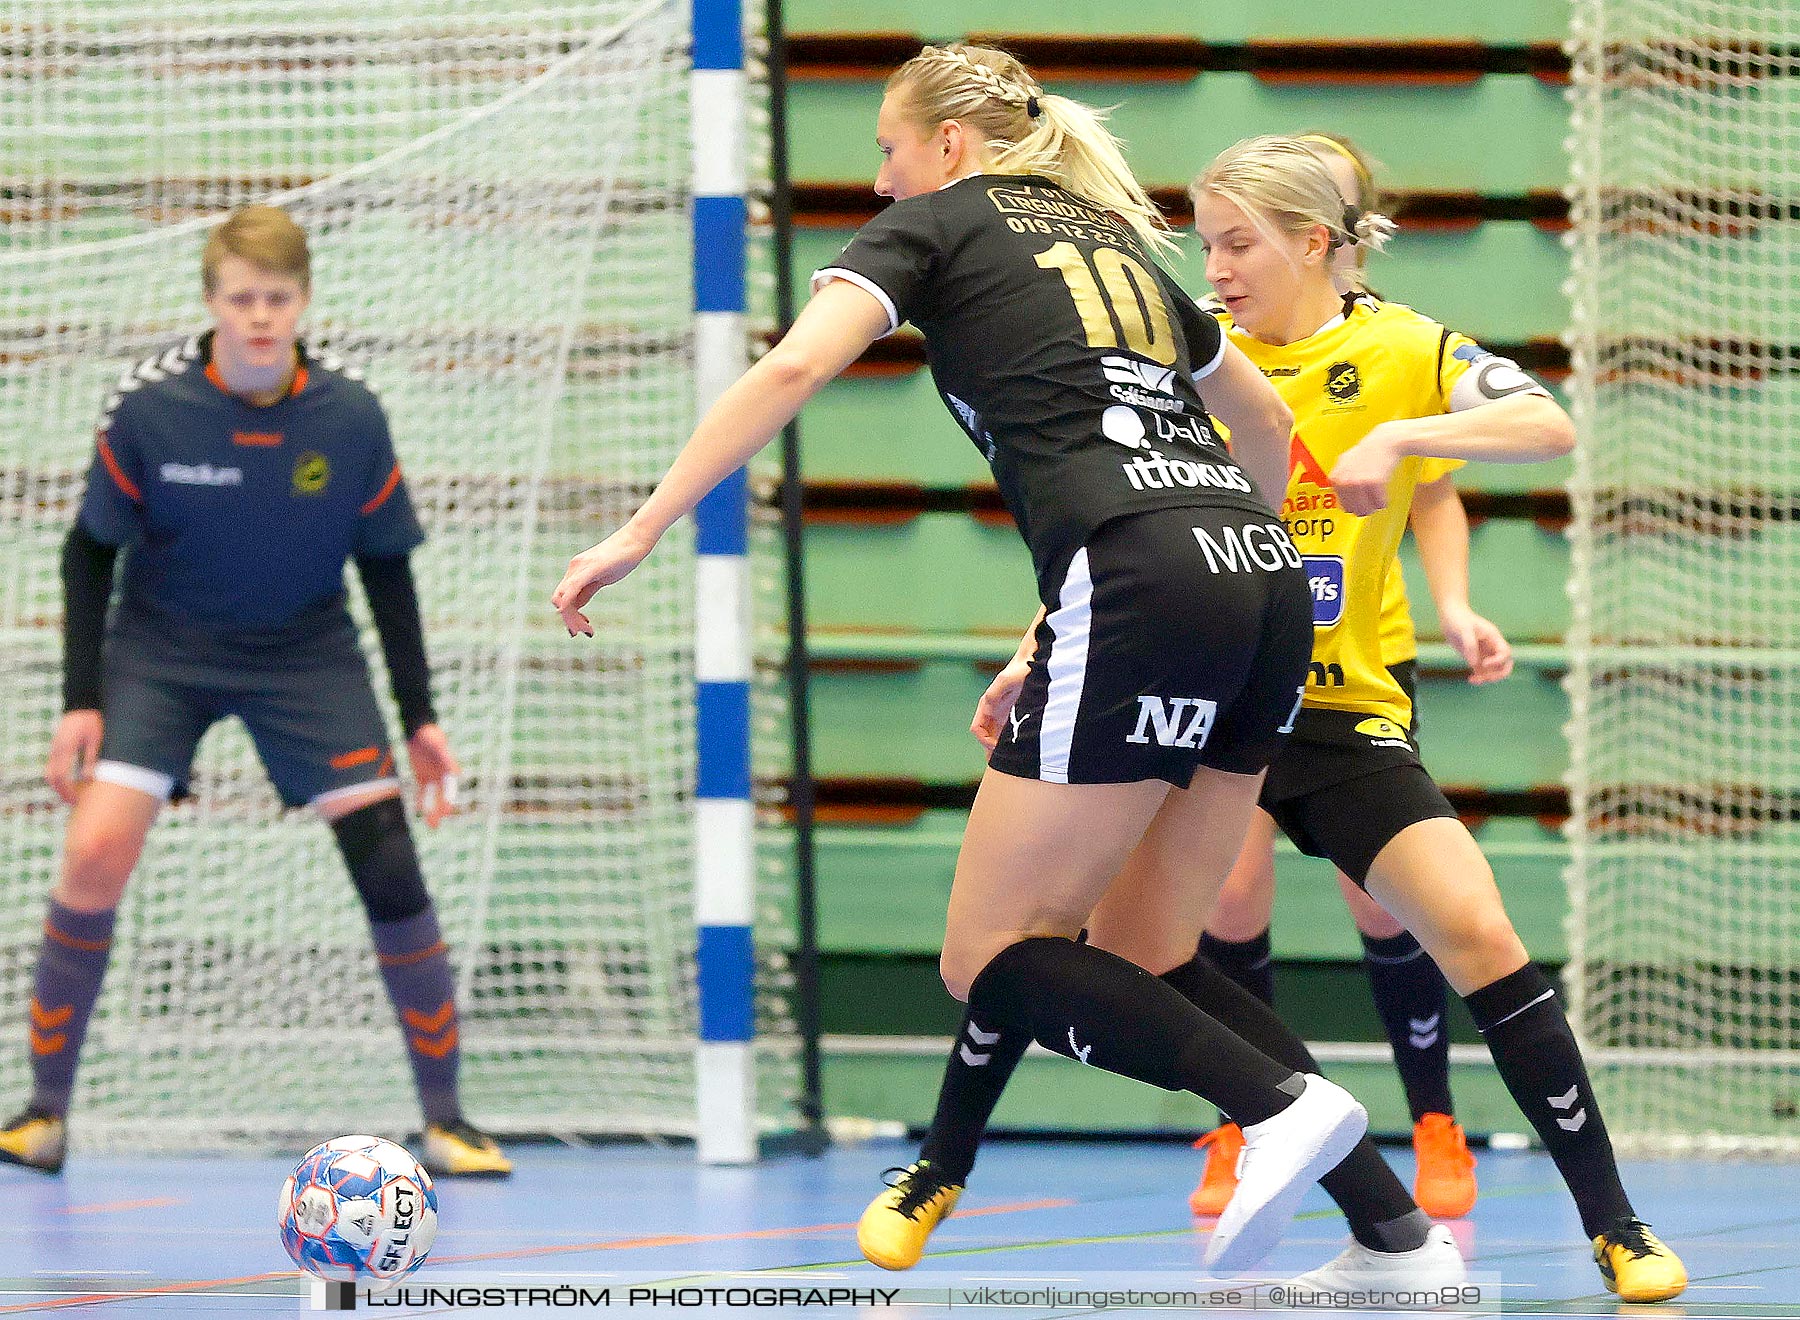 Skövde Futsalcup 2021 Damer Örebro Futsal Club-Skultorps IF 2,dam,Arena Skövde,Skövde,Sverige,Futsal,,2021,270525